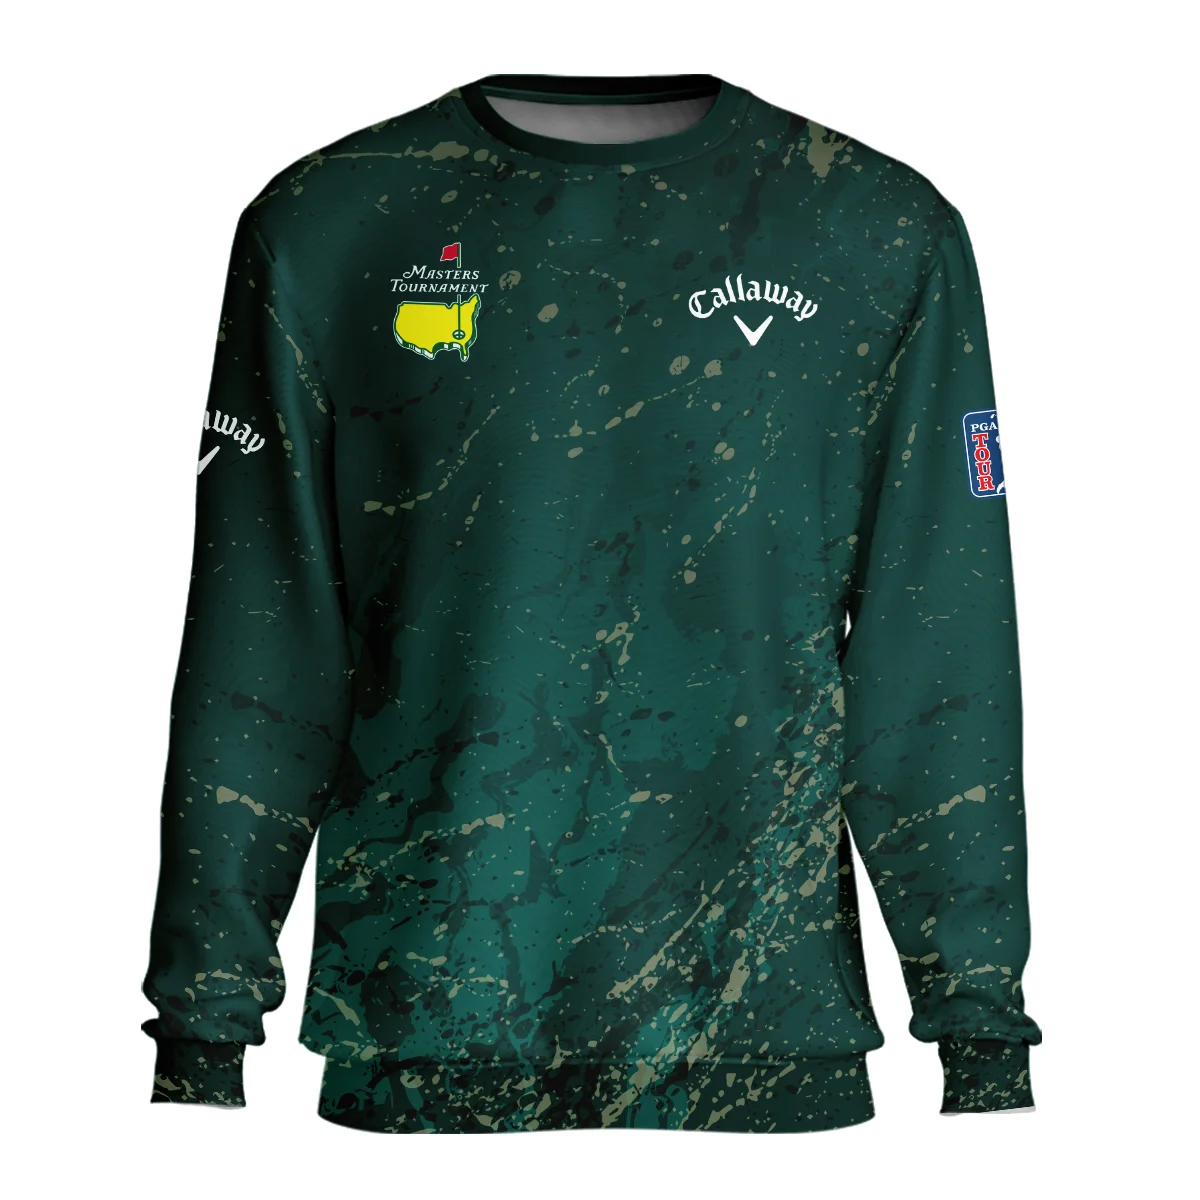 Old Cracked Texture With Gold Splash Paint Masters Tournament Callaway Unisex Sweatshirt Style Classic Sweatshirt